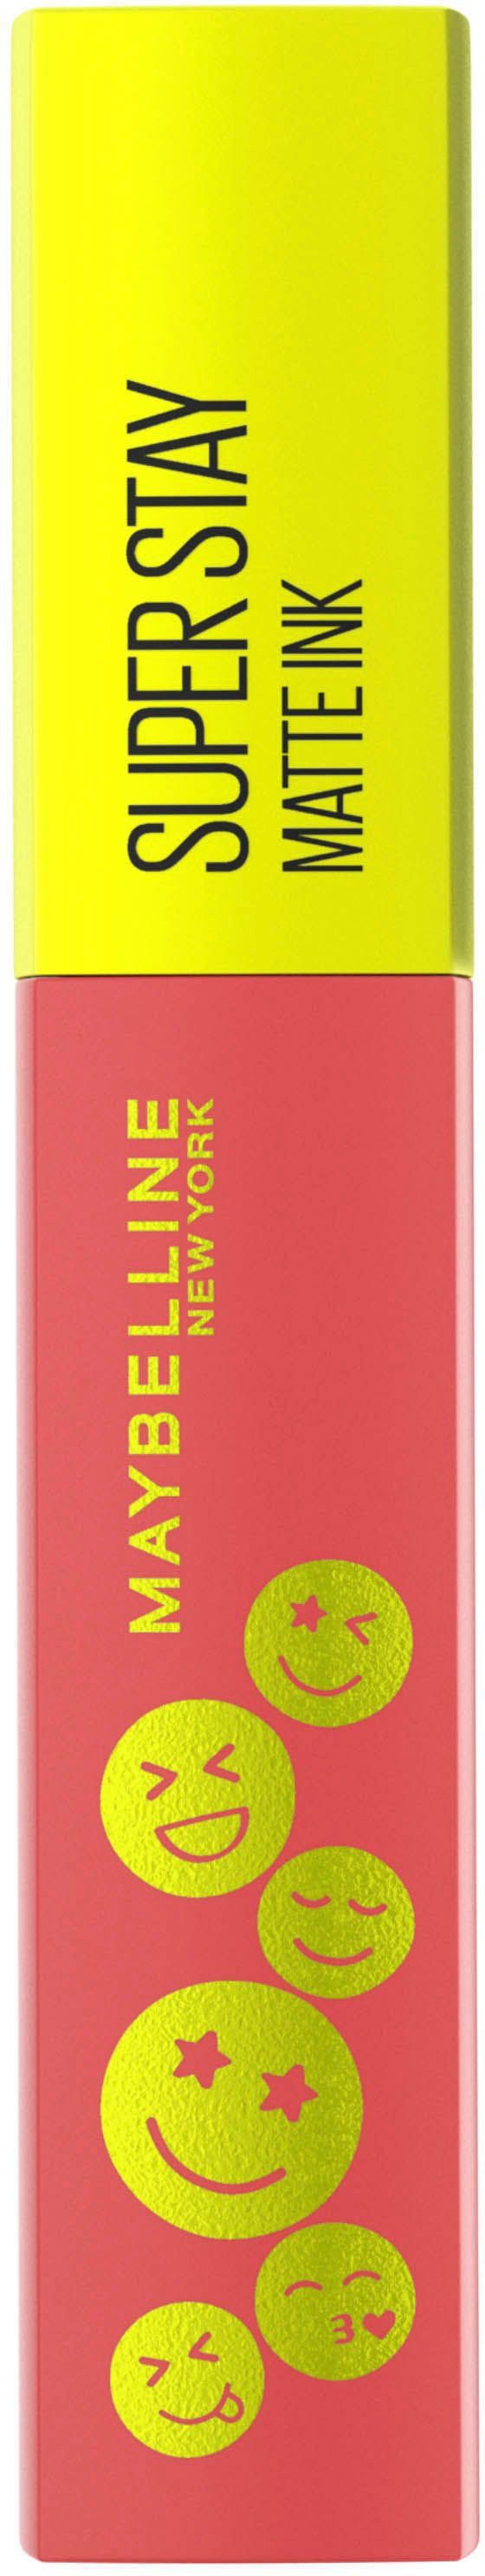 Lippenstift York New MAYBELLINE Super YORK Lippenstift Ink NEW Maybelline Stay Matte